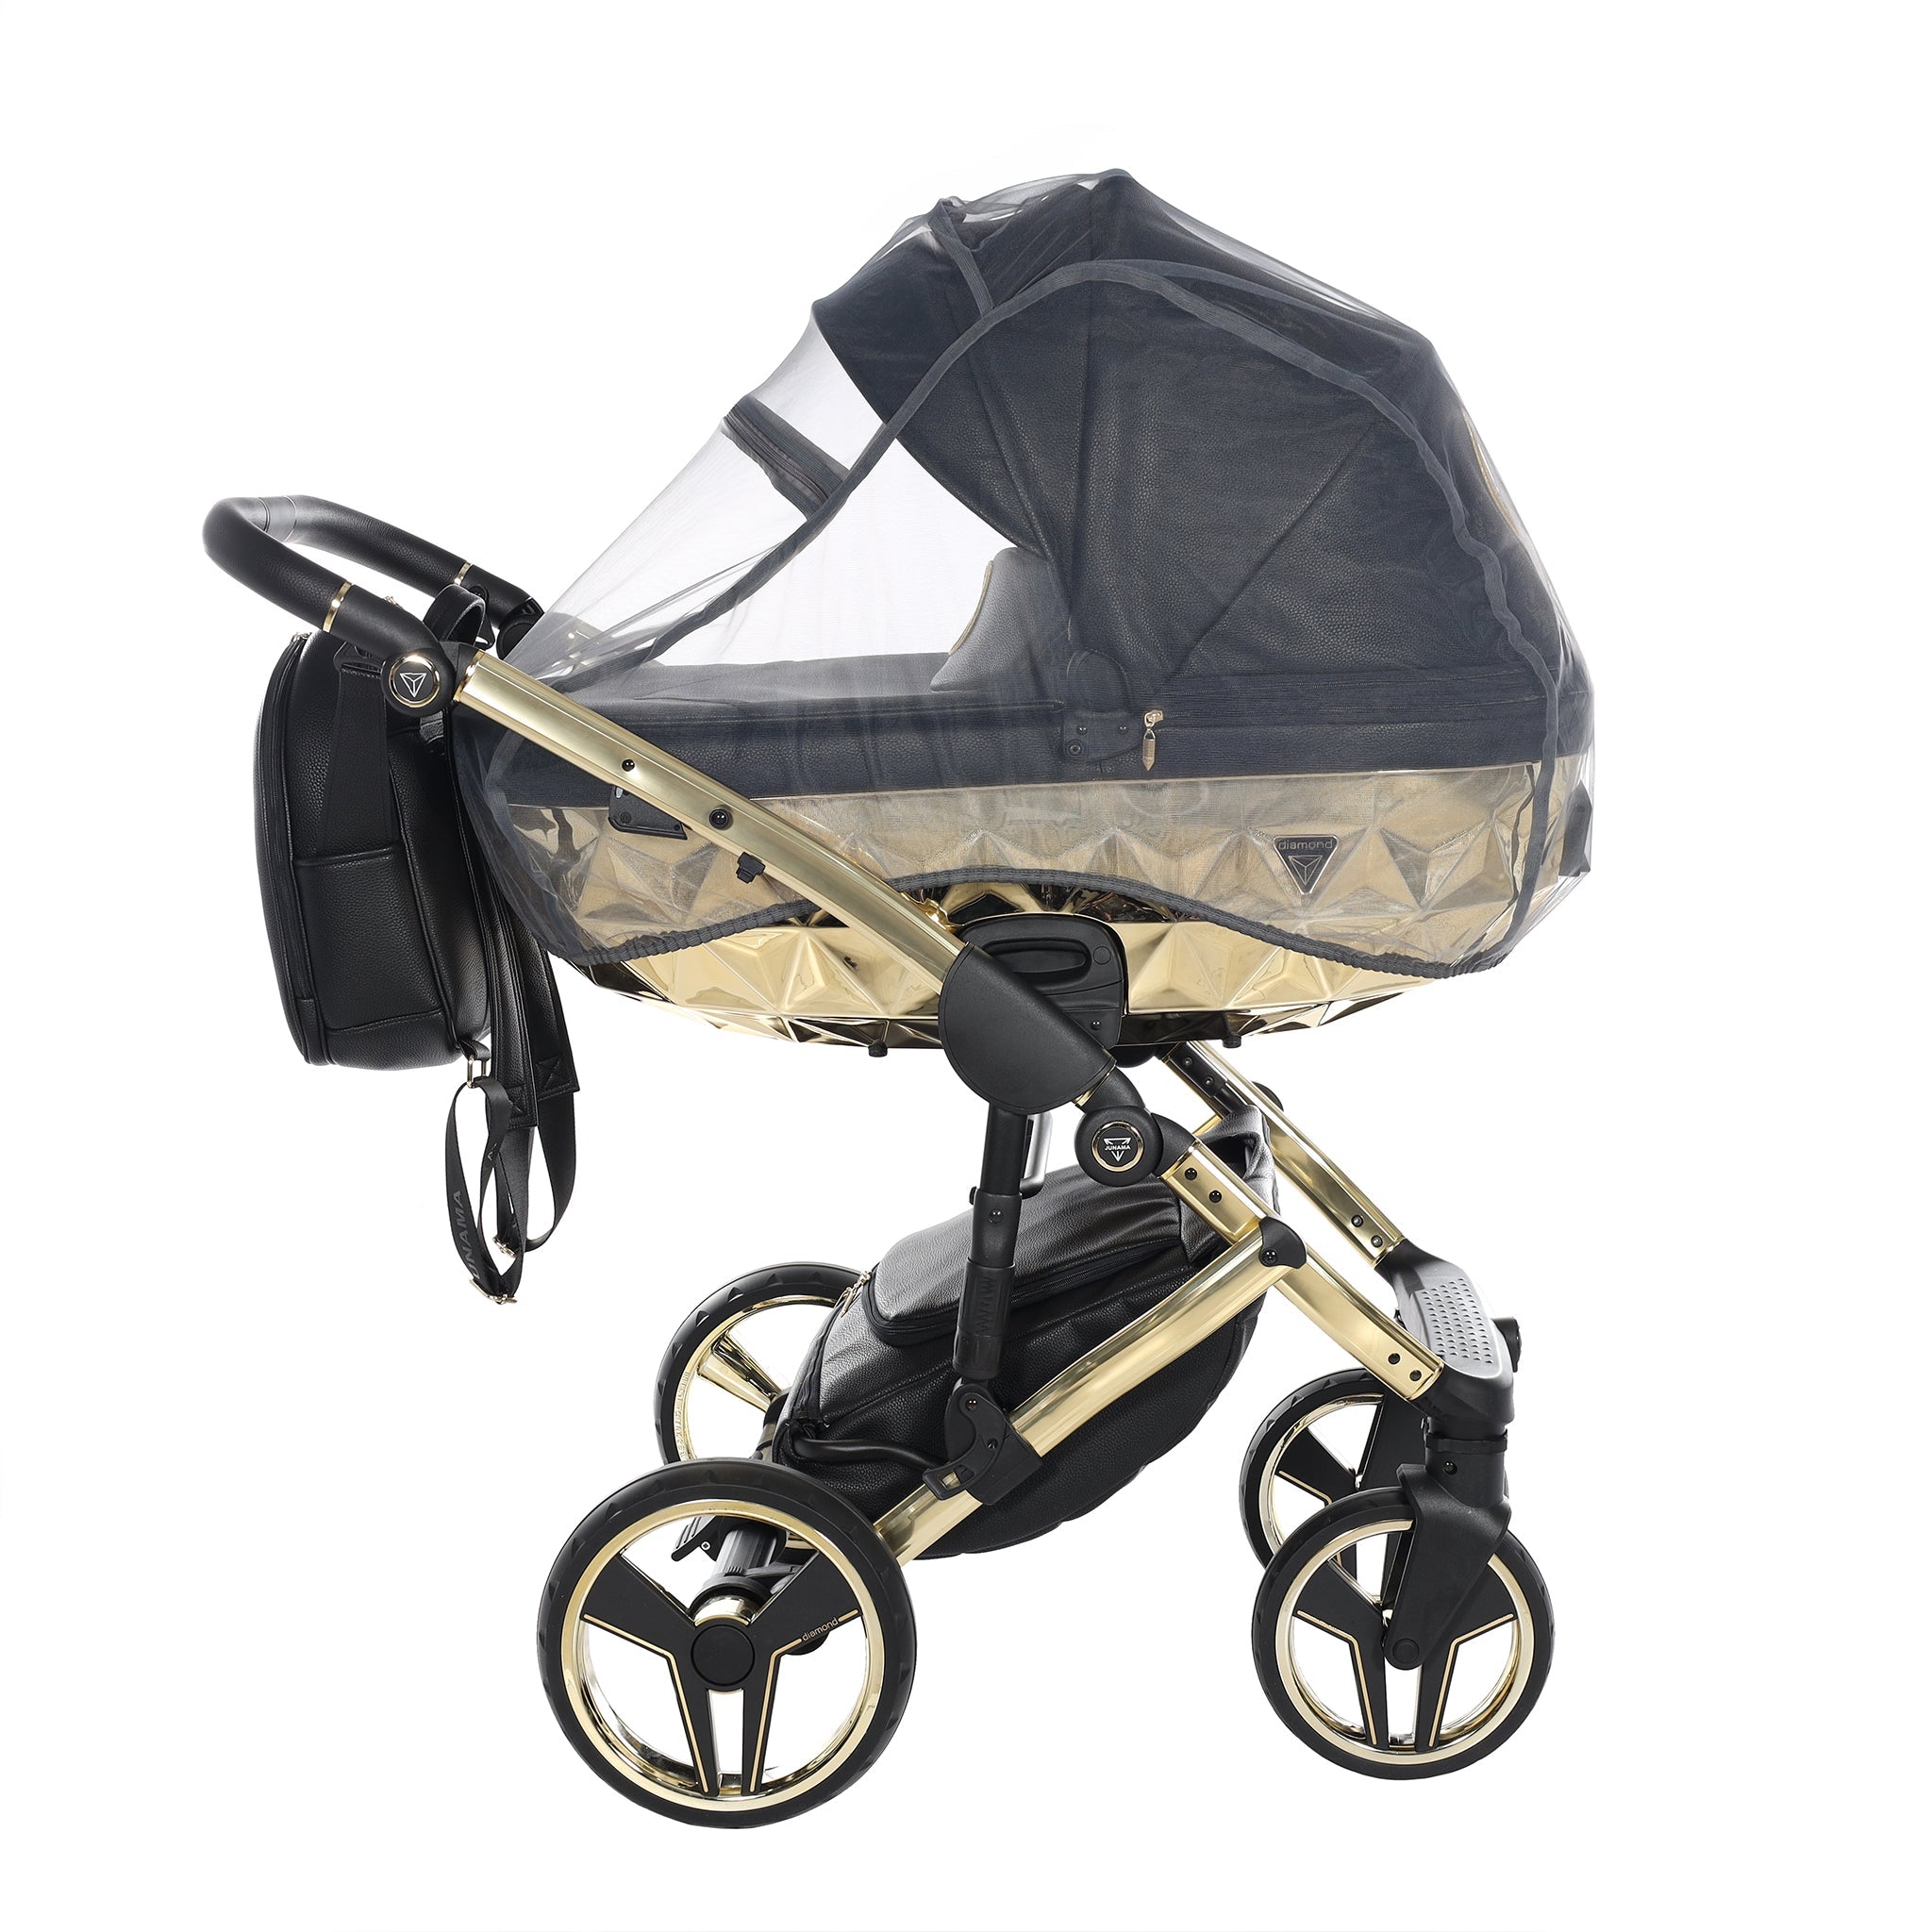 Junama Handcraft, baby prams or stroller 2 in 1 - Black and gold, number: JUNHC05